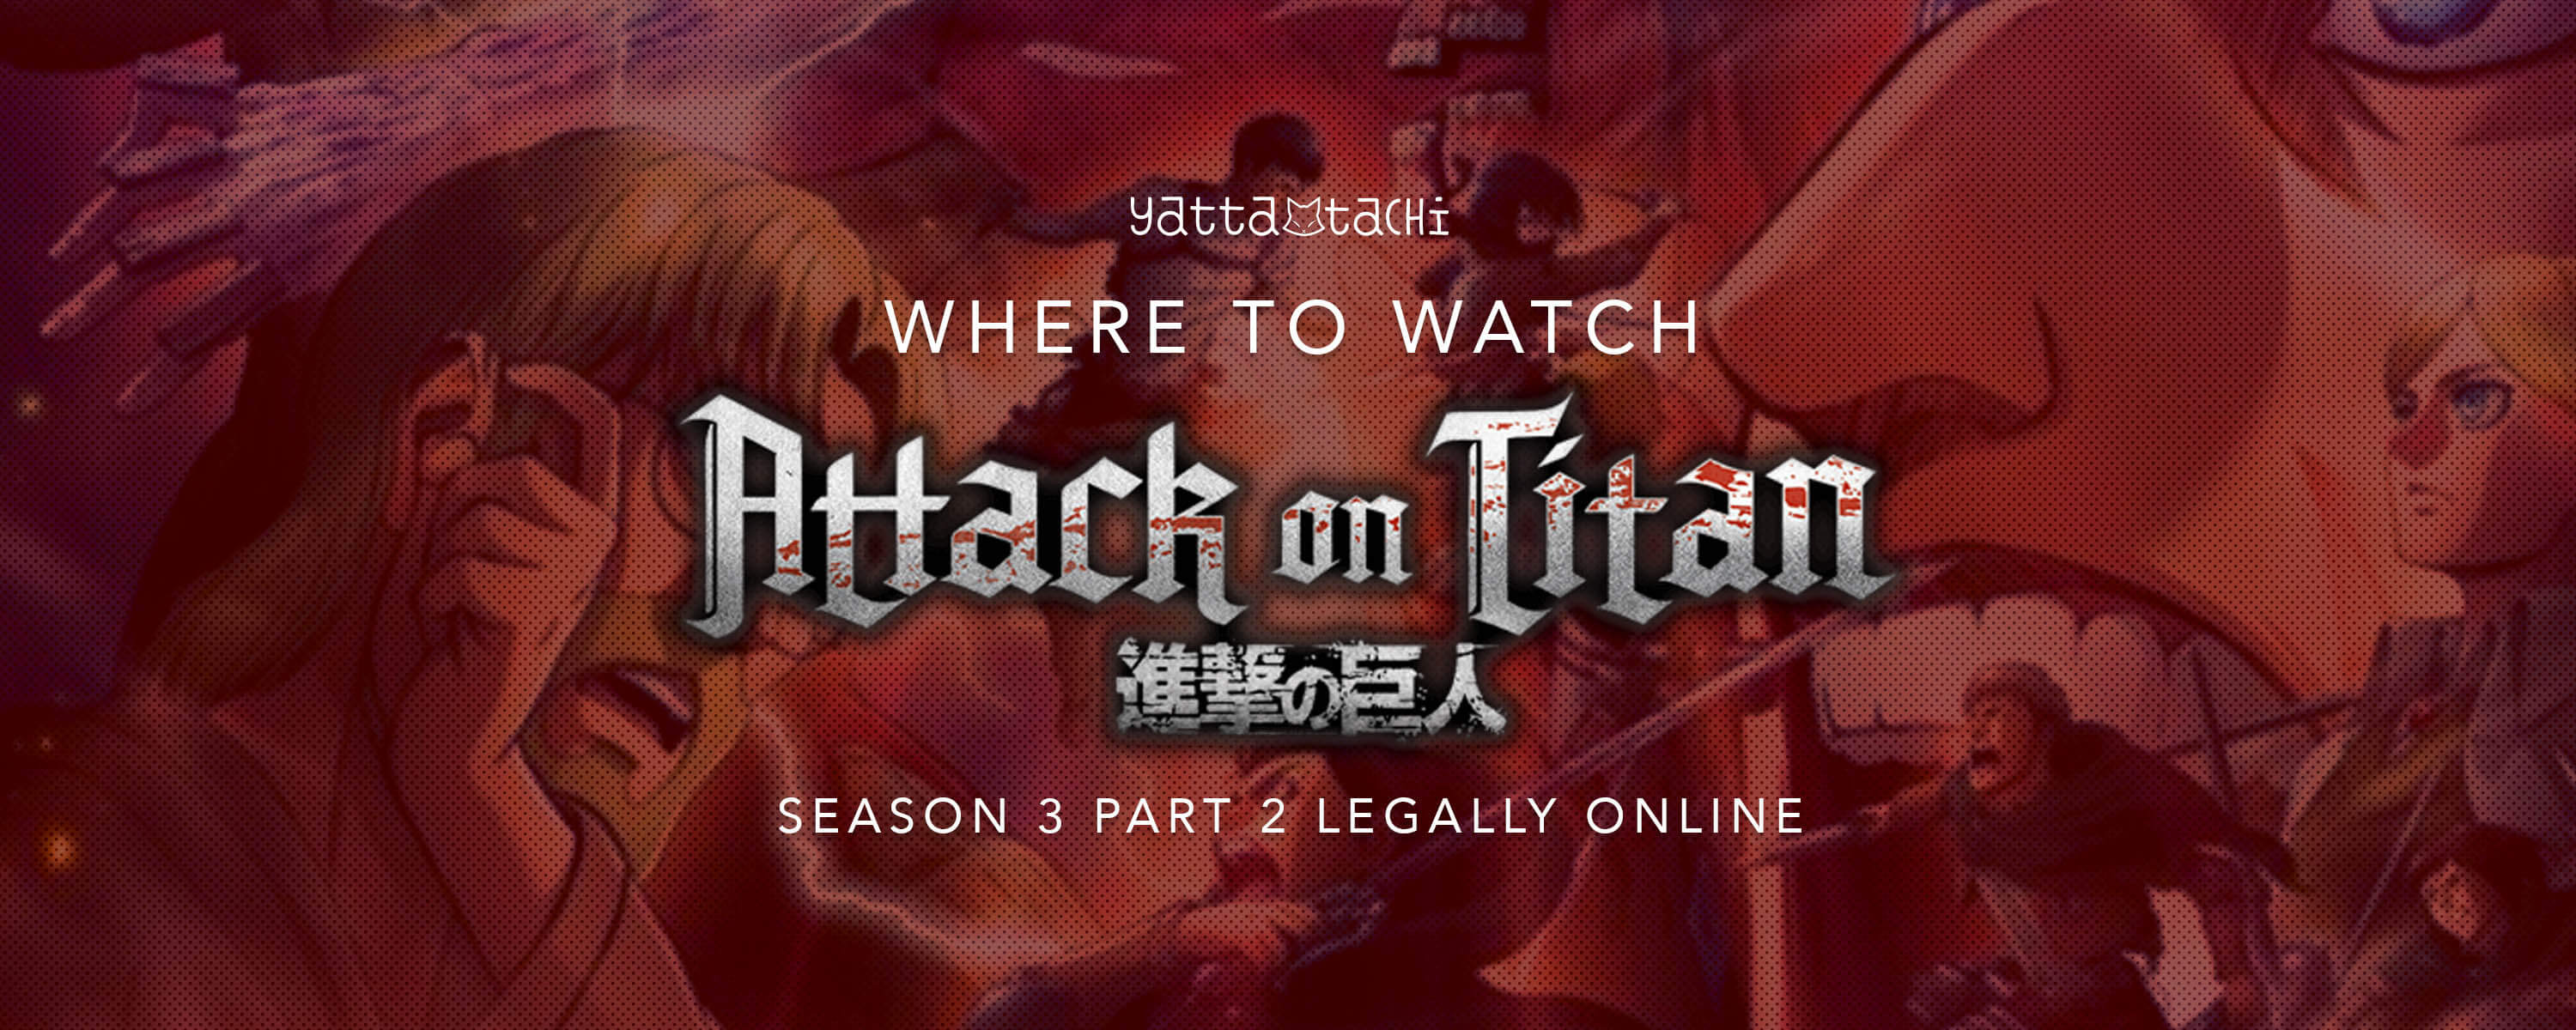 Where To Watch Attack On Titan Season 3 Part 2 | Yatta-Tachi